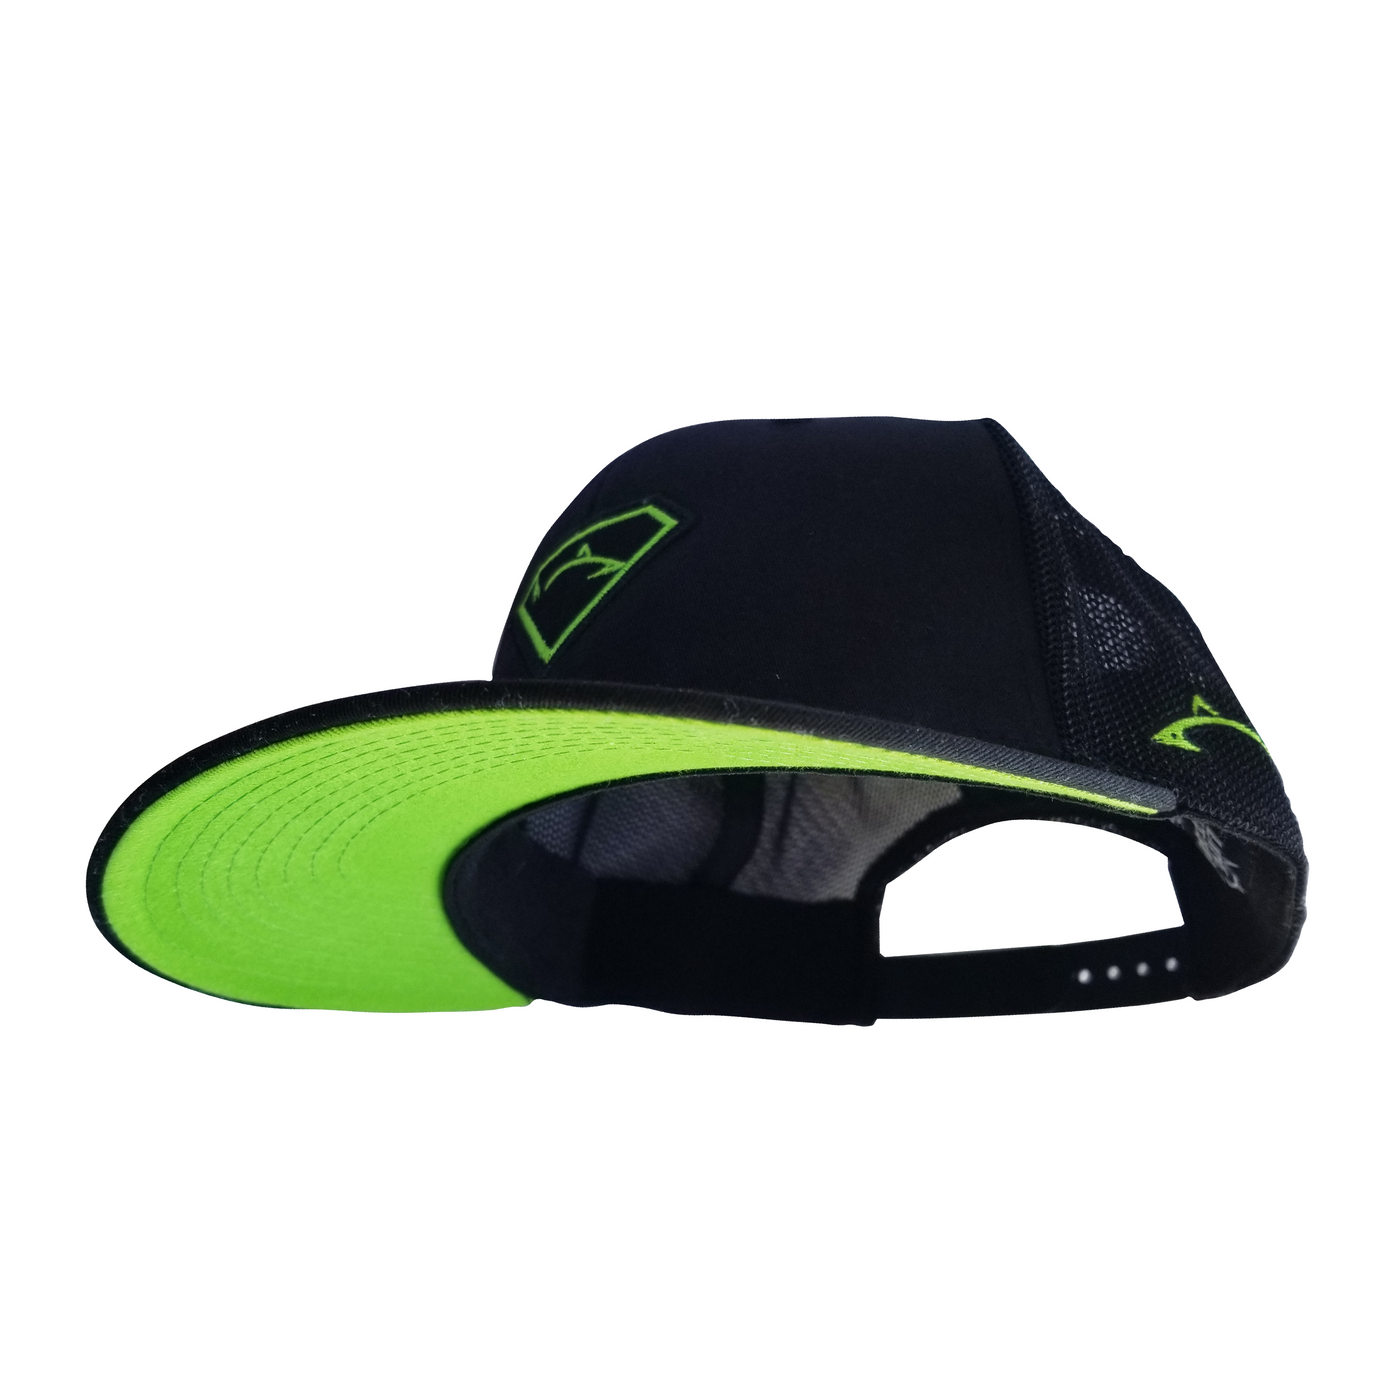 Pro Fish Gear "SUPERFISH" Snapback Hat Hats Pro Fish Gear 